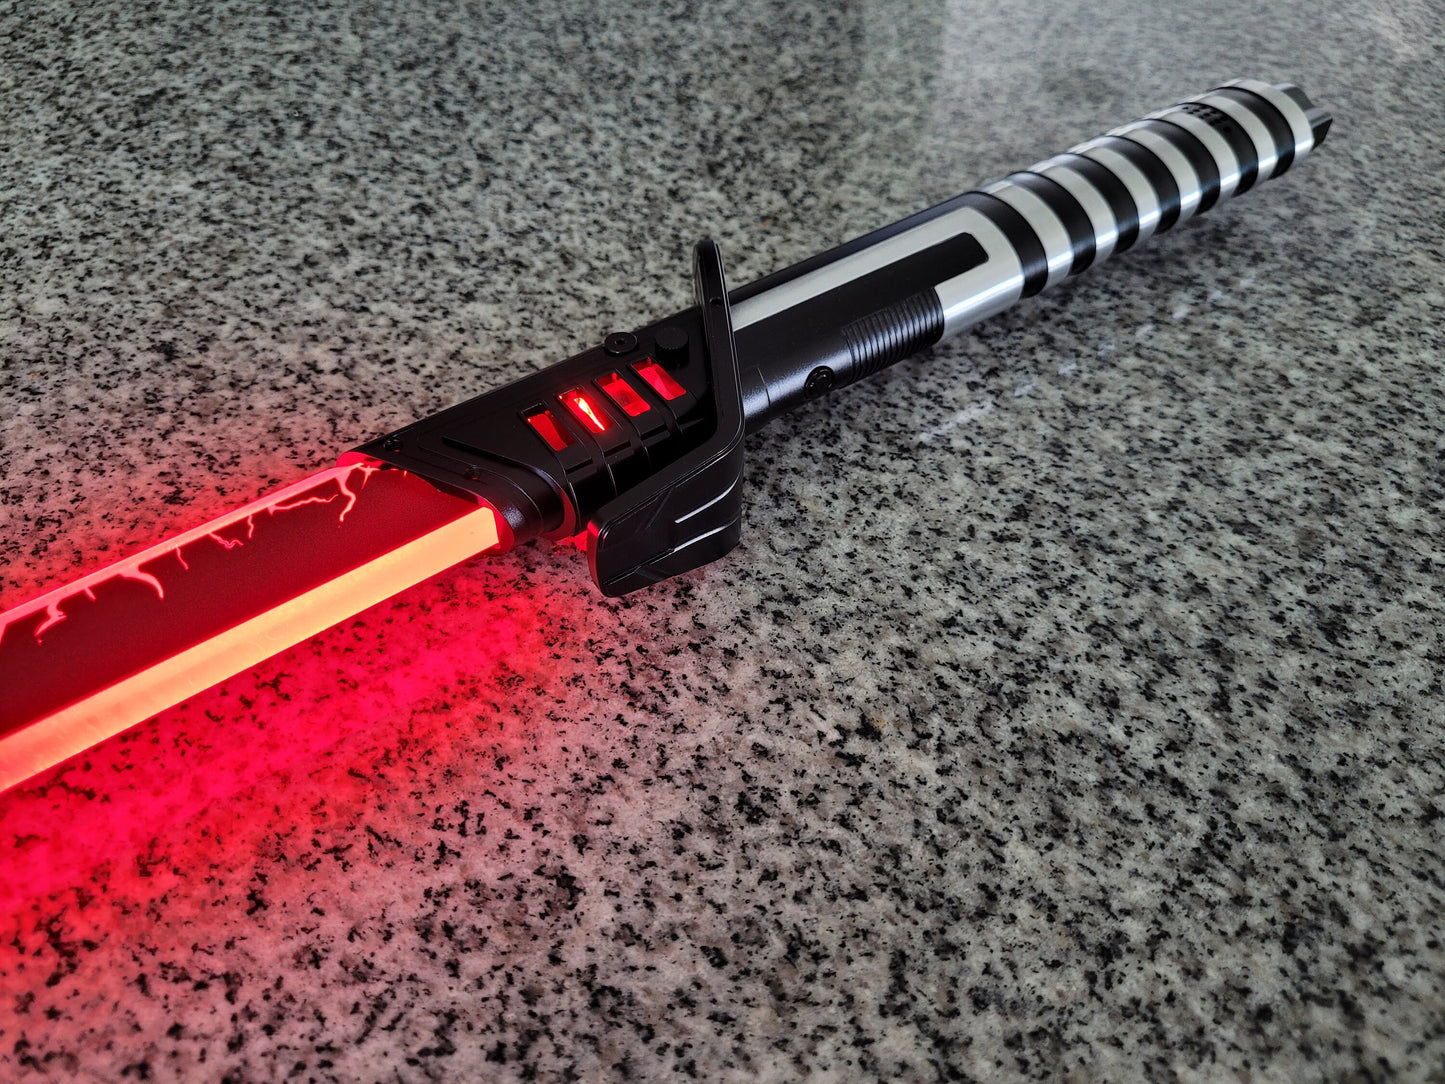 Dark Saber RGB Color Change Lightsaber with Sound – Attractive Hilt, RGB, Star Wars Bossaber